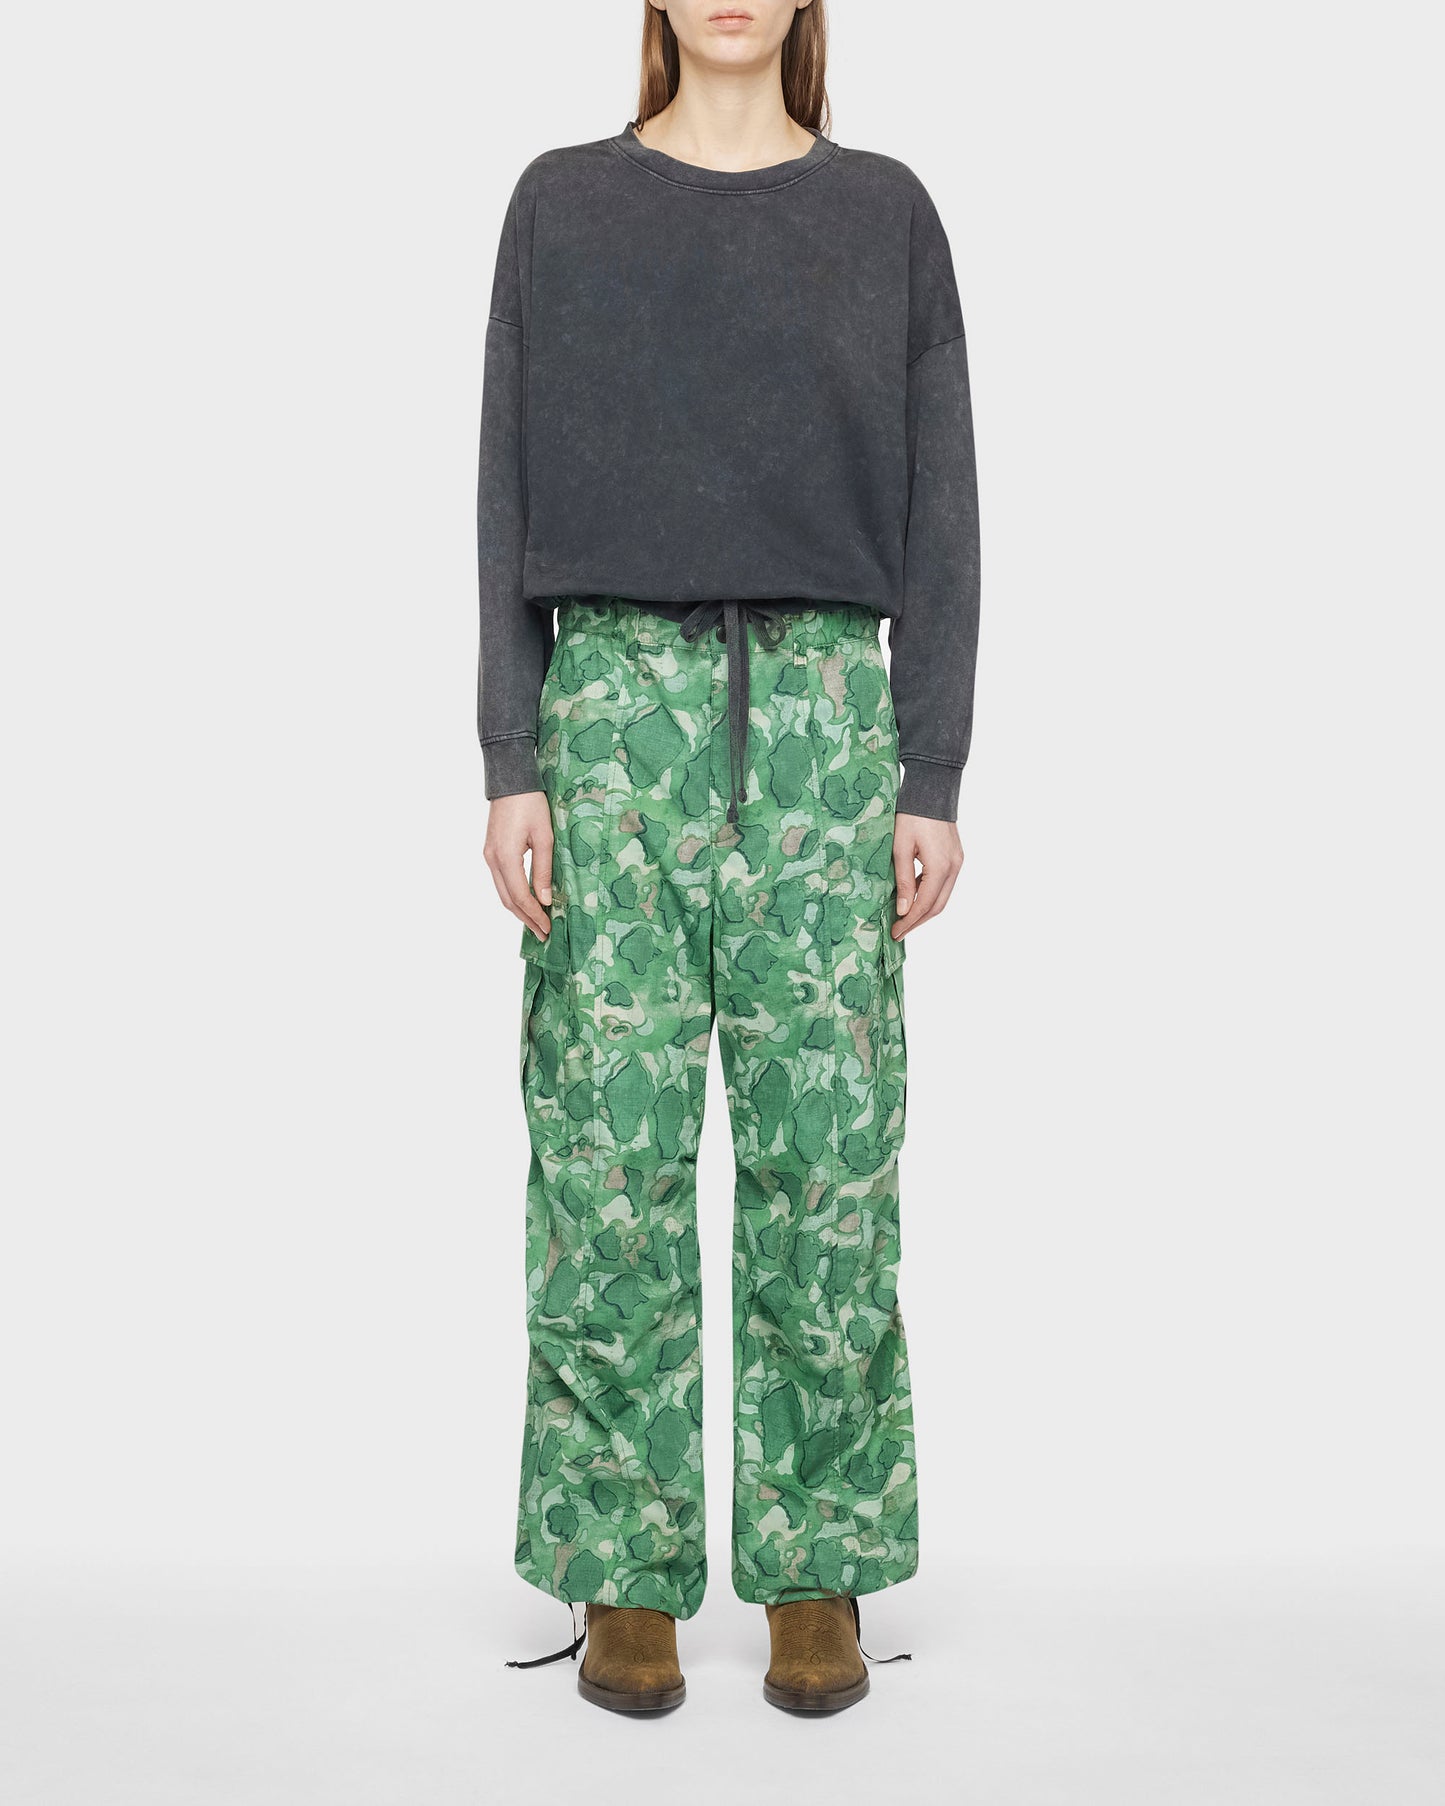 Cornhill pantalone cargo popeline camouflage